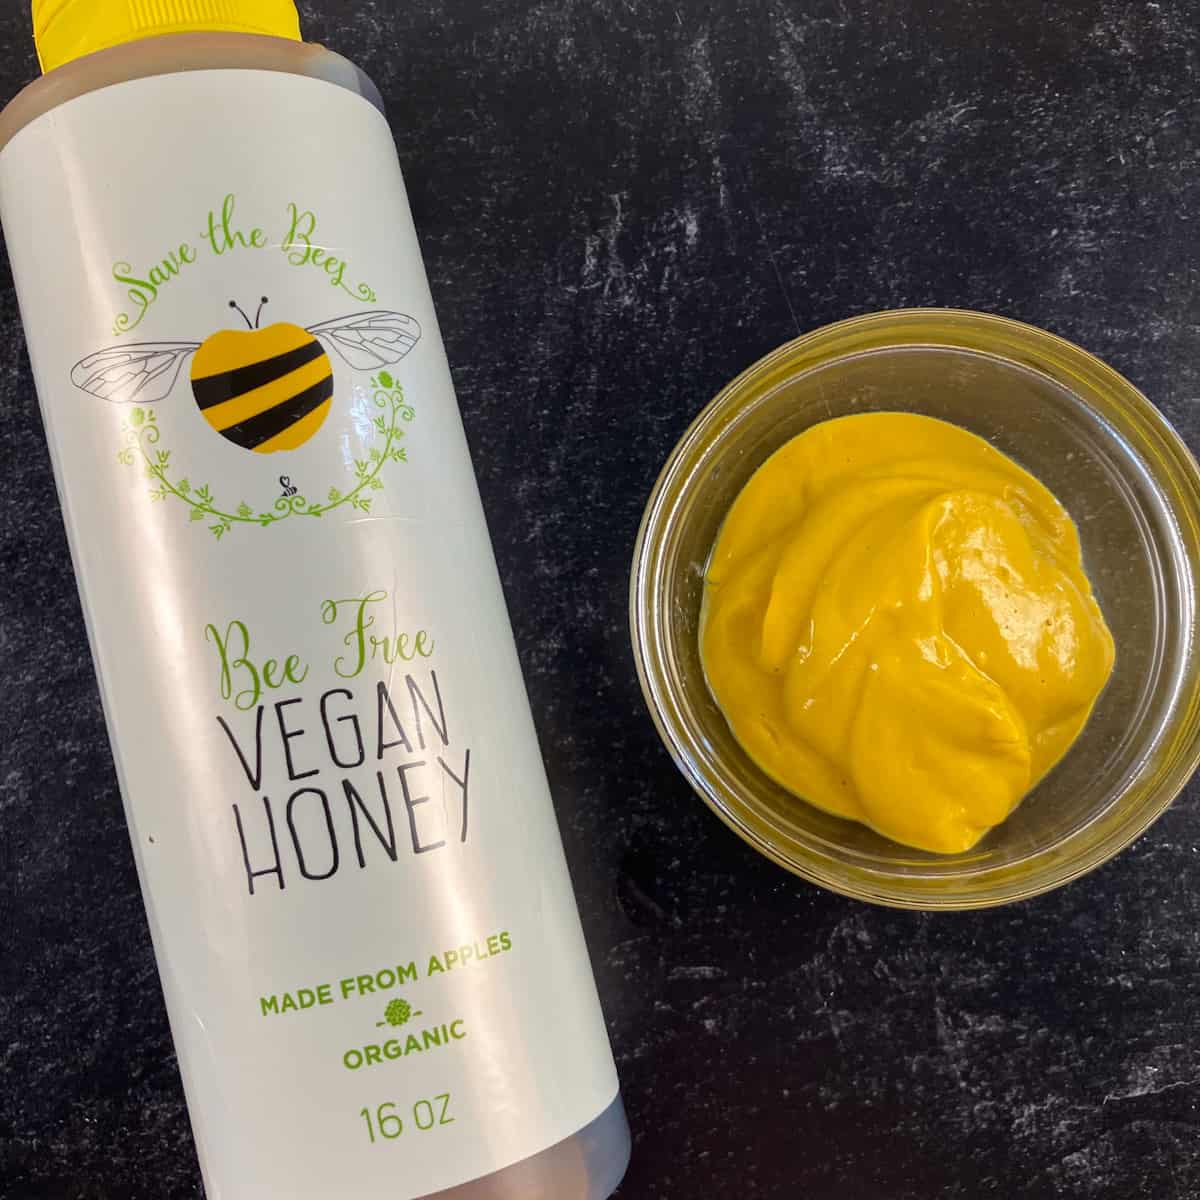 vegan honey mustard ingredients